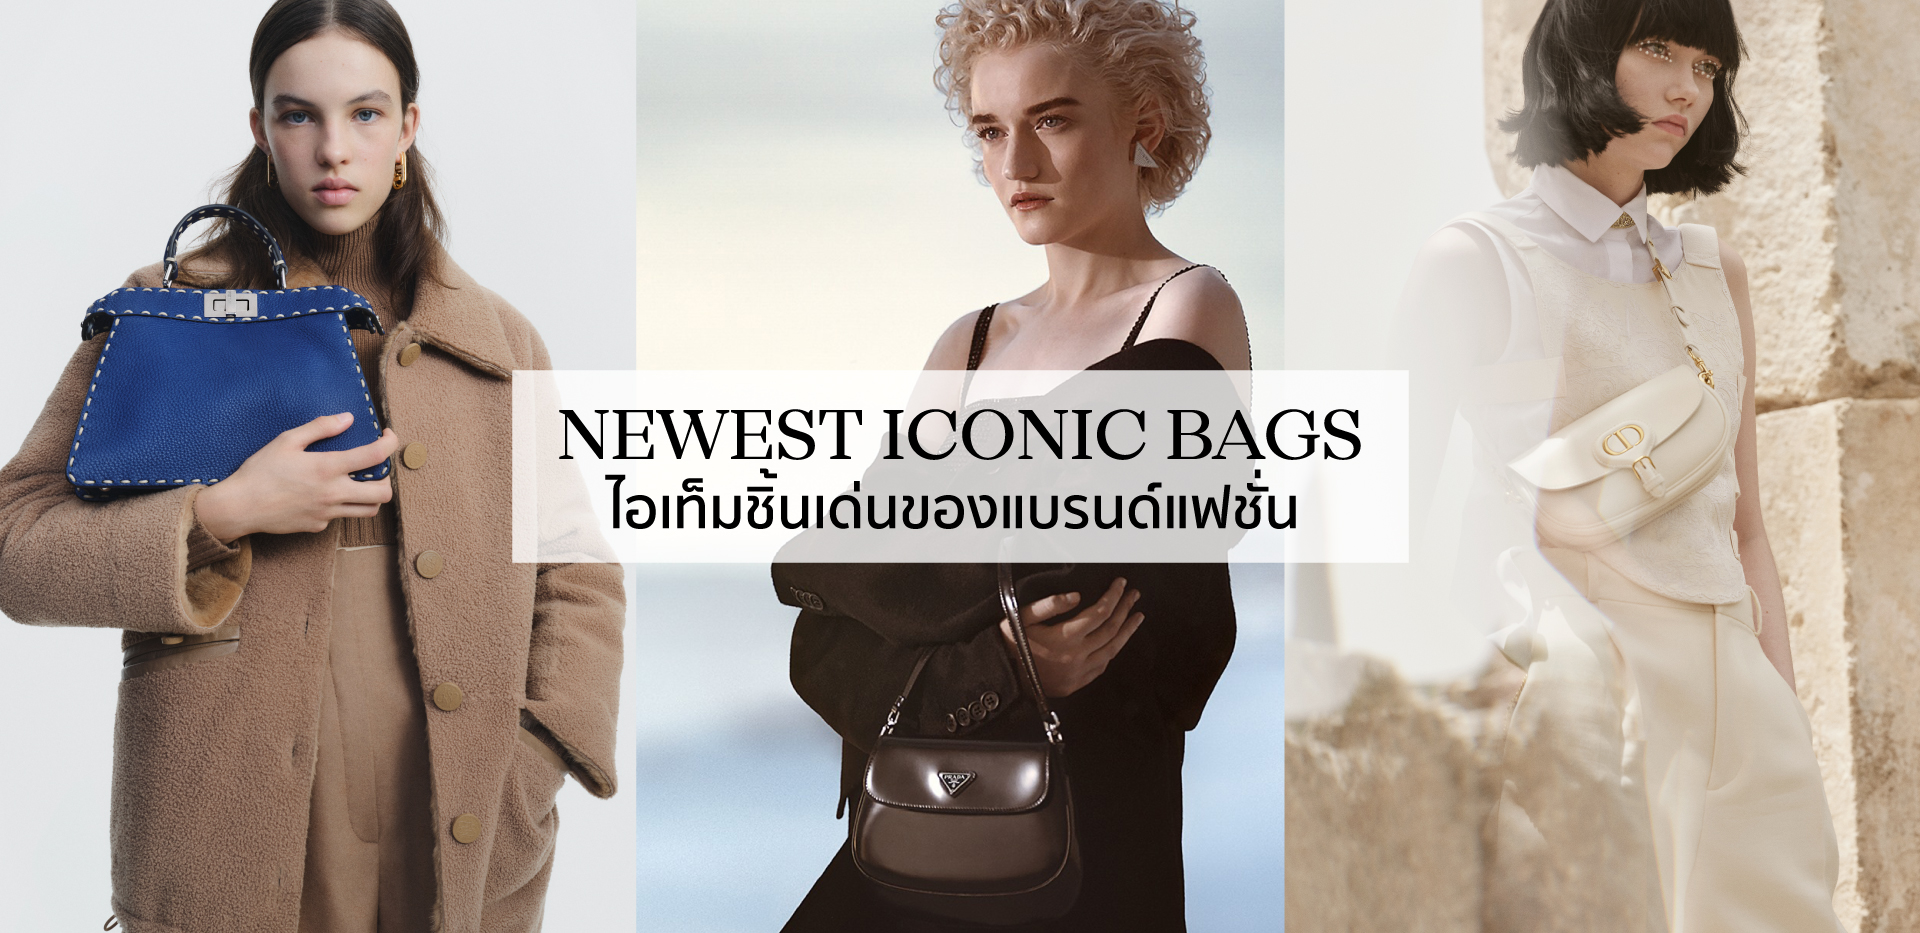 Newest Iconic Bags ไอเท็มชิ้นเด่นของแบรนด์แฟชั่น